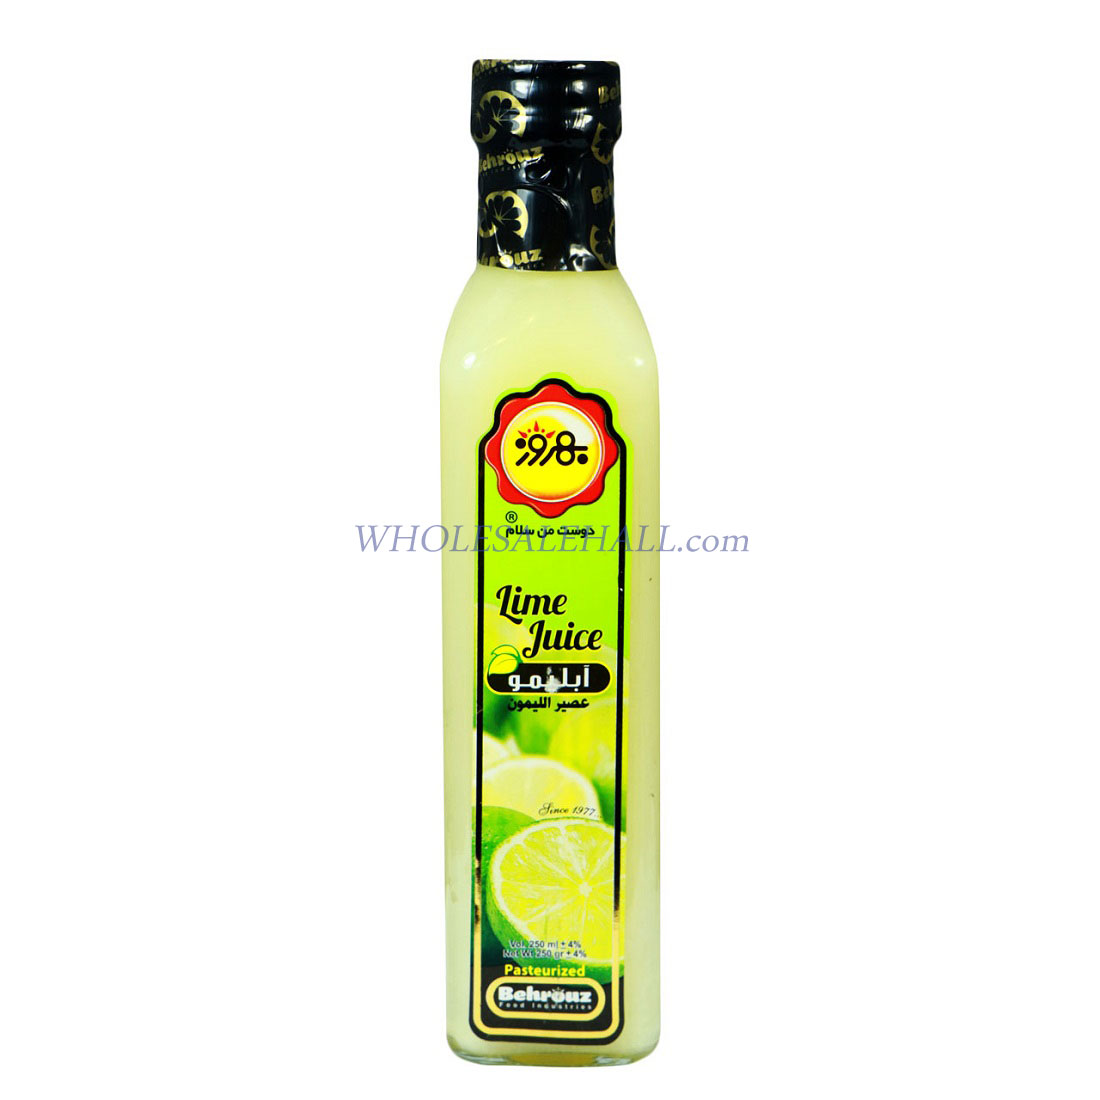 250 grams of Behrouz lemon juice